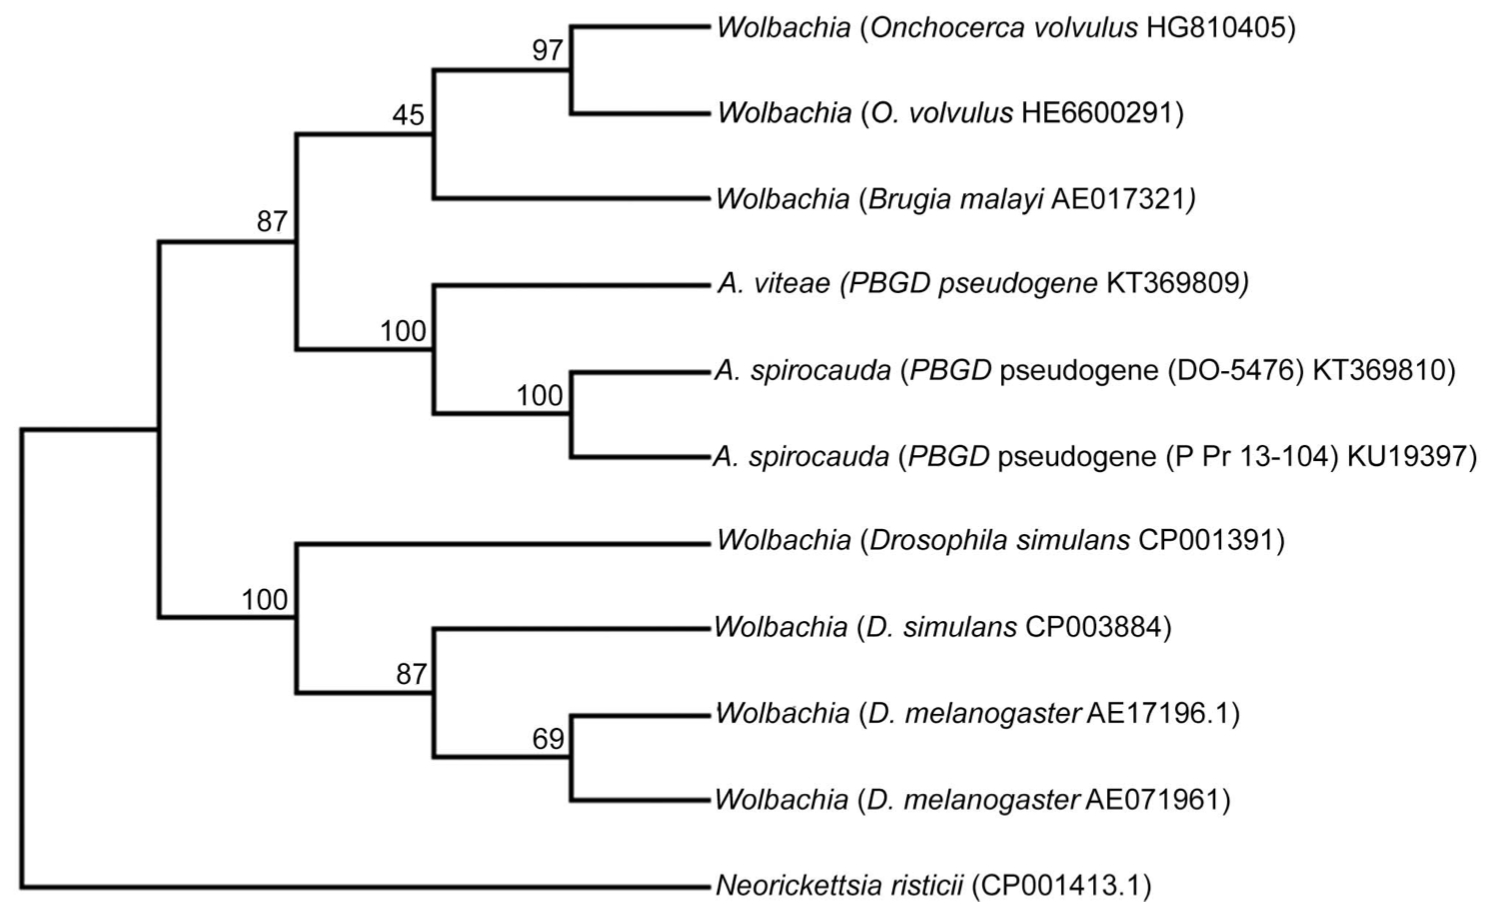 Phylogeny showing *PBDG* pseudogene of *A. spirocauda* nesting within *Wolbachia PBGD*